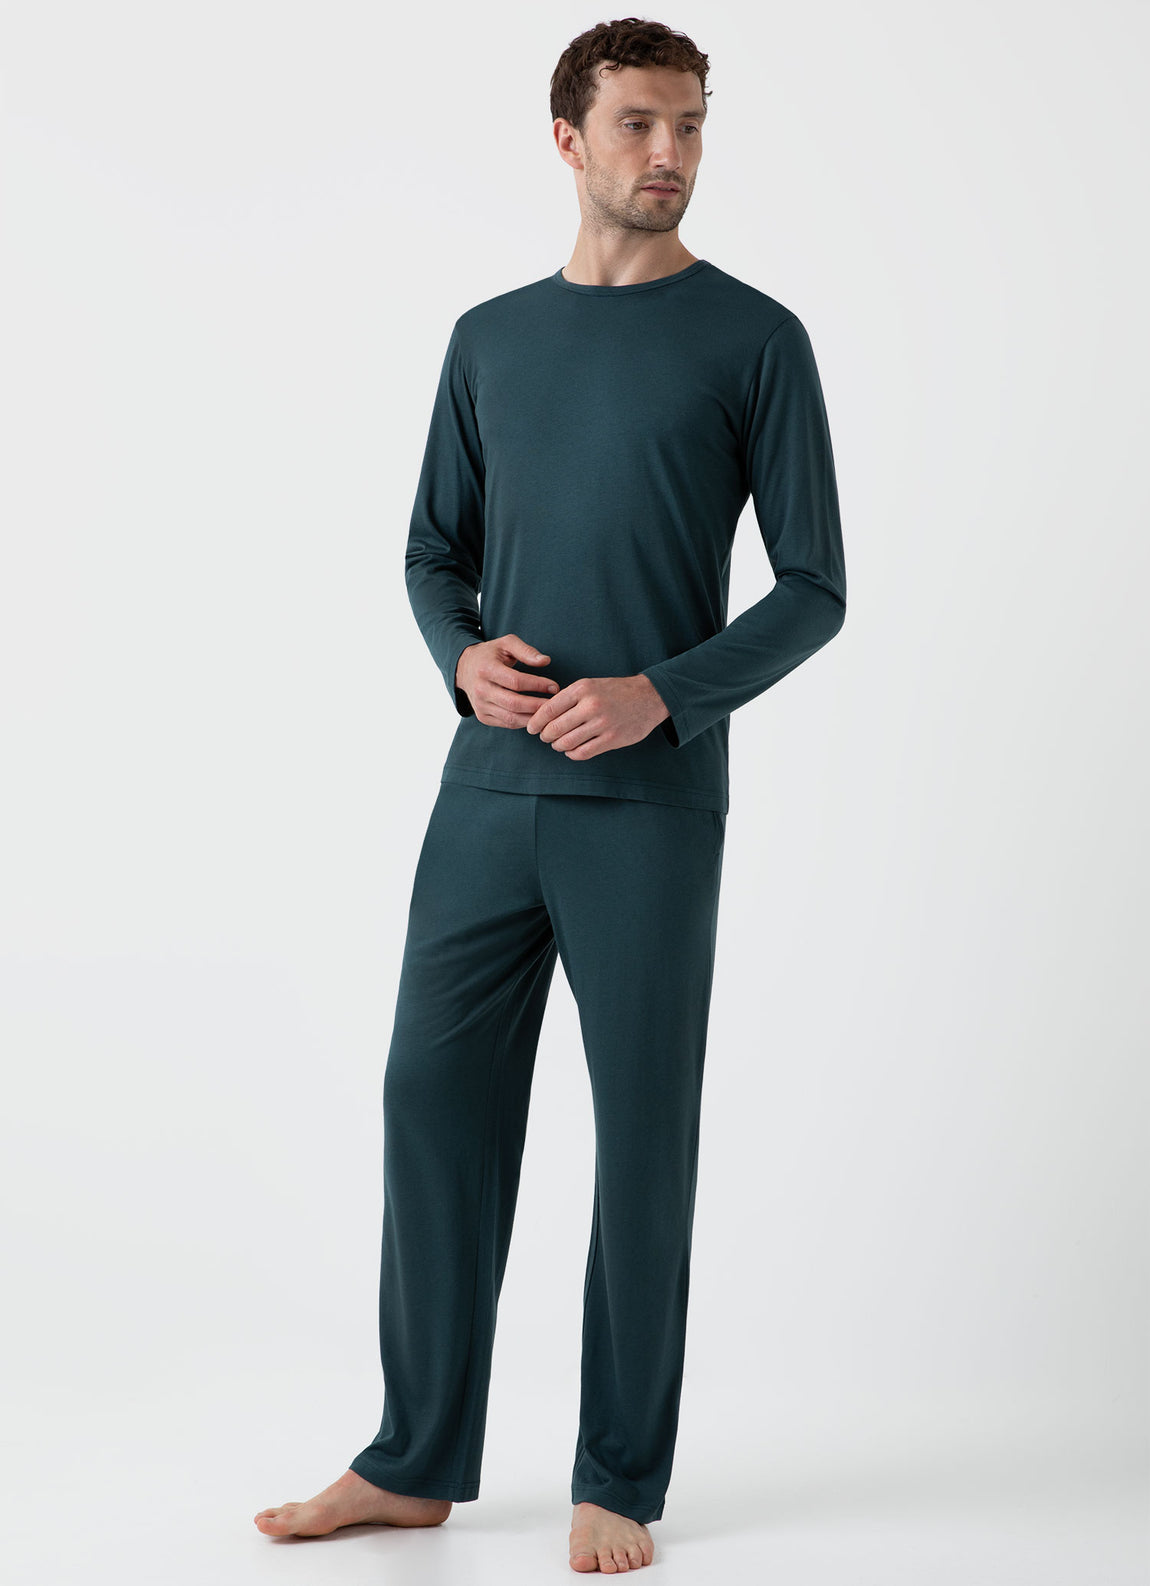 Men's Cotton Modal Lounge Pant in Peacock | Sunspel